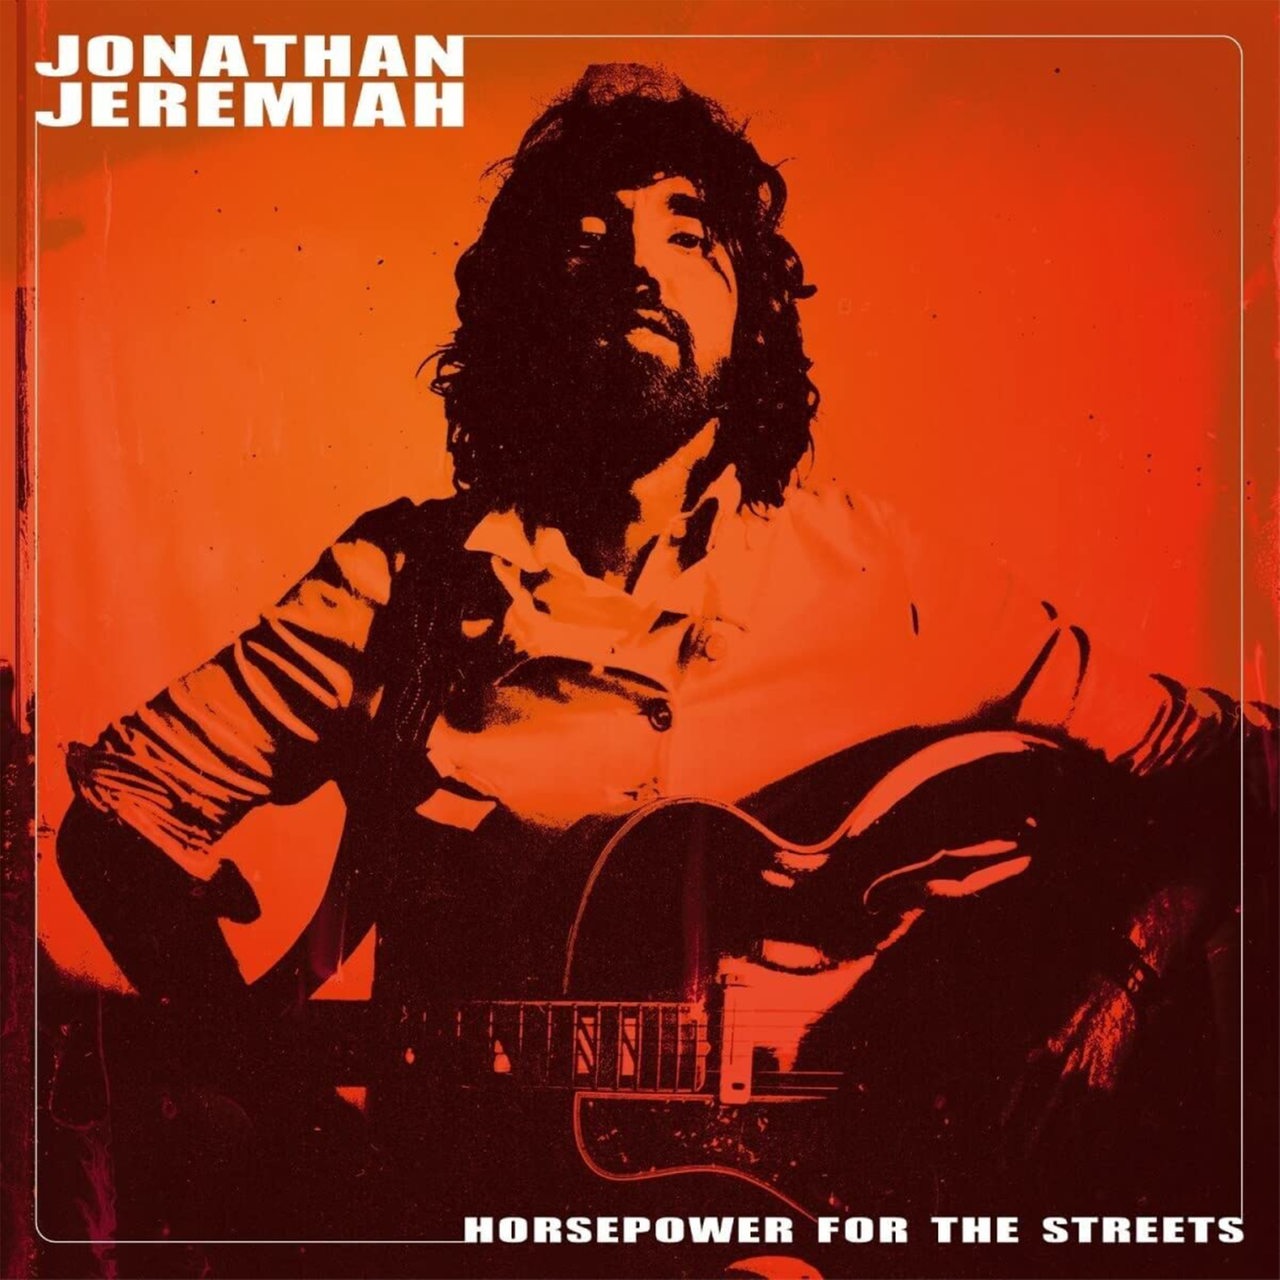 Jonathan Jeremiah, Horsepower for the Street, Pias Recordings Germany (Rough Trade)